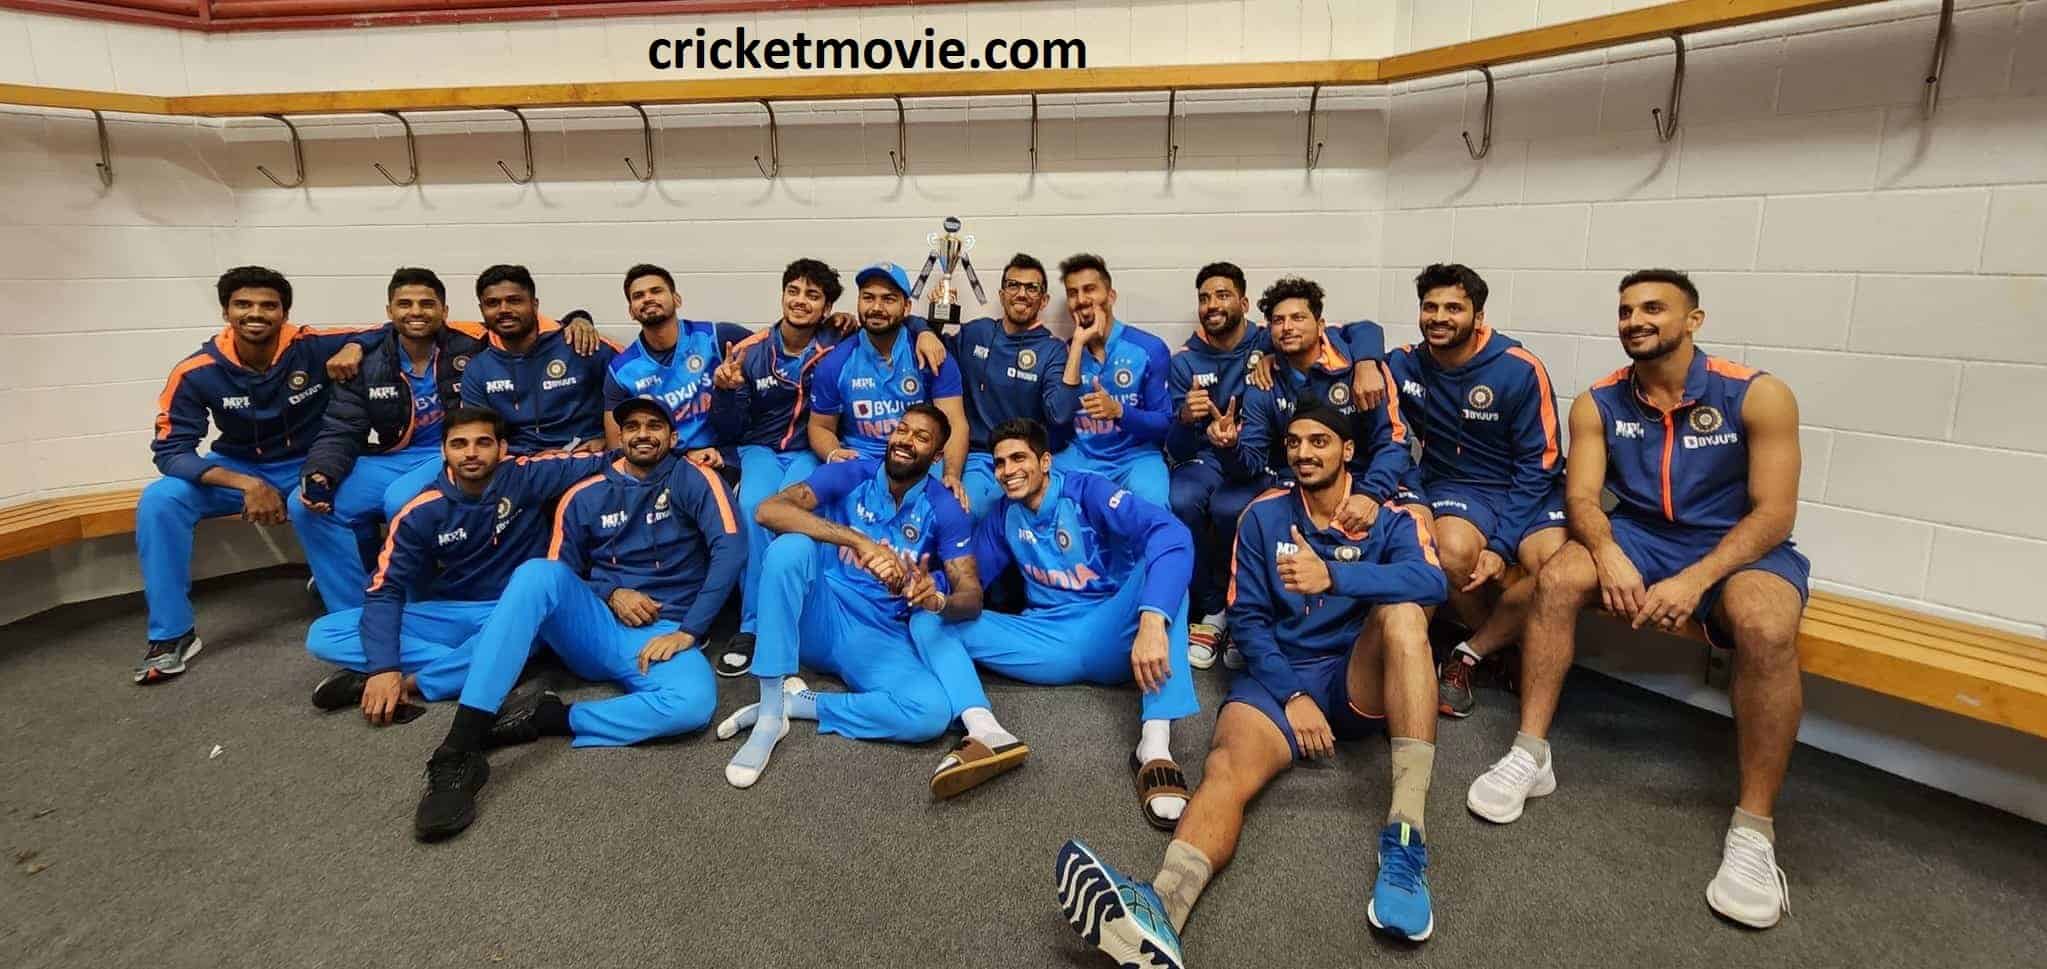 Team India won T20I series against New Zealand-cricketmovie.com